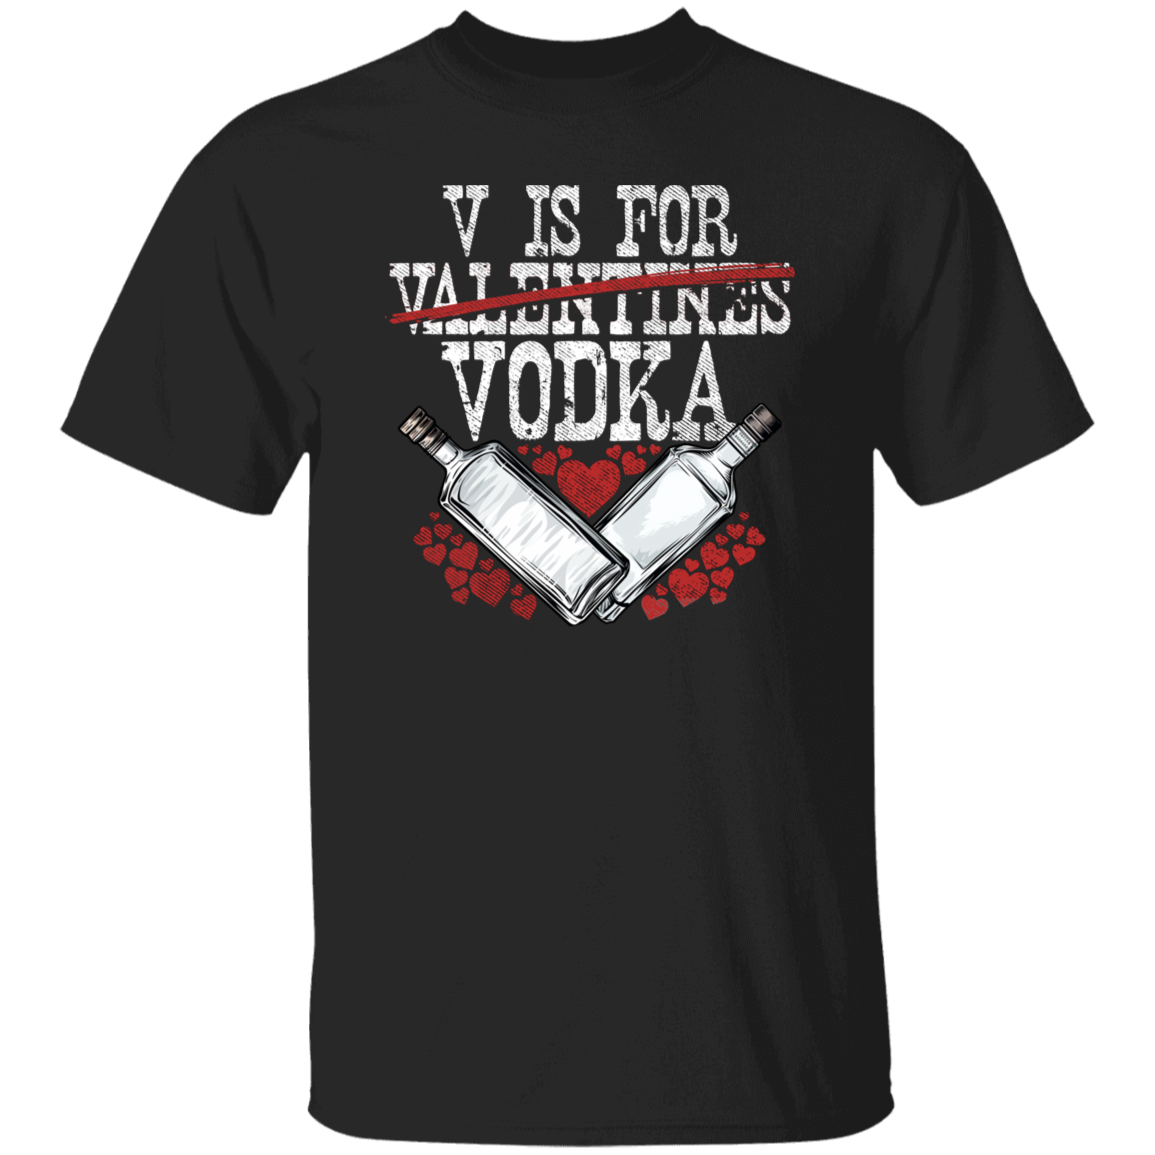 V is for Vodka Apparel CustomCat G500 5.3 oz. T-Shirt Black S